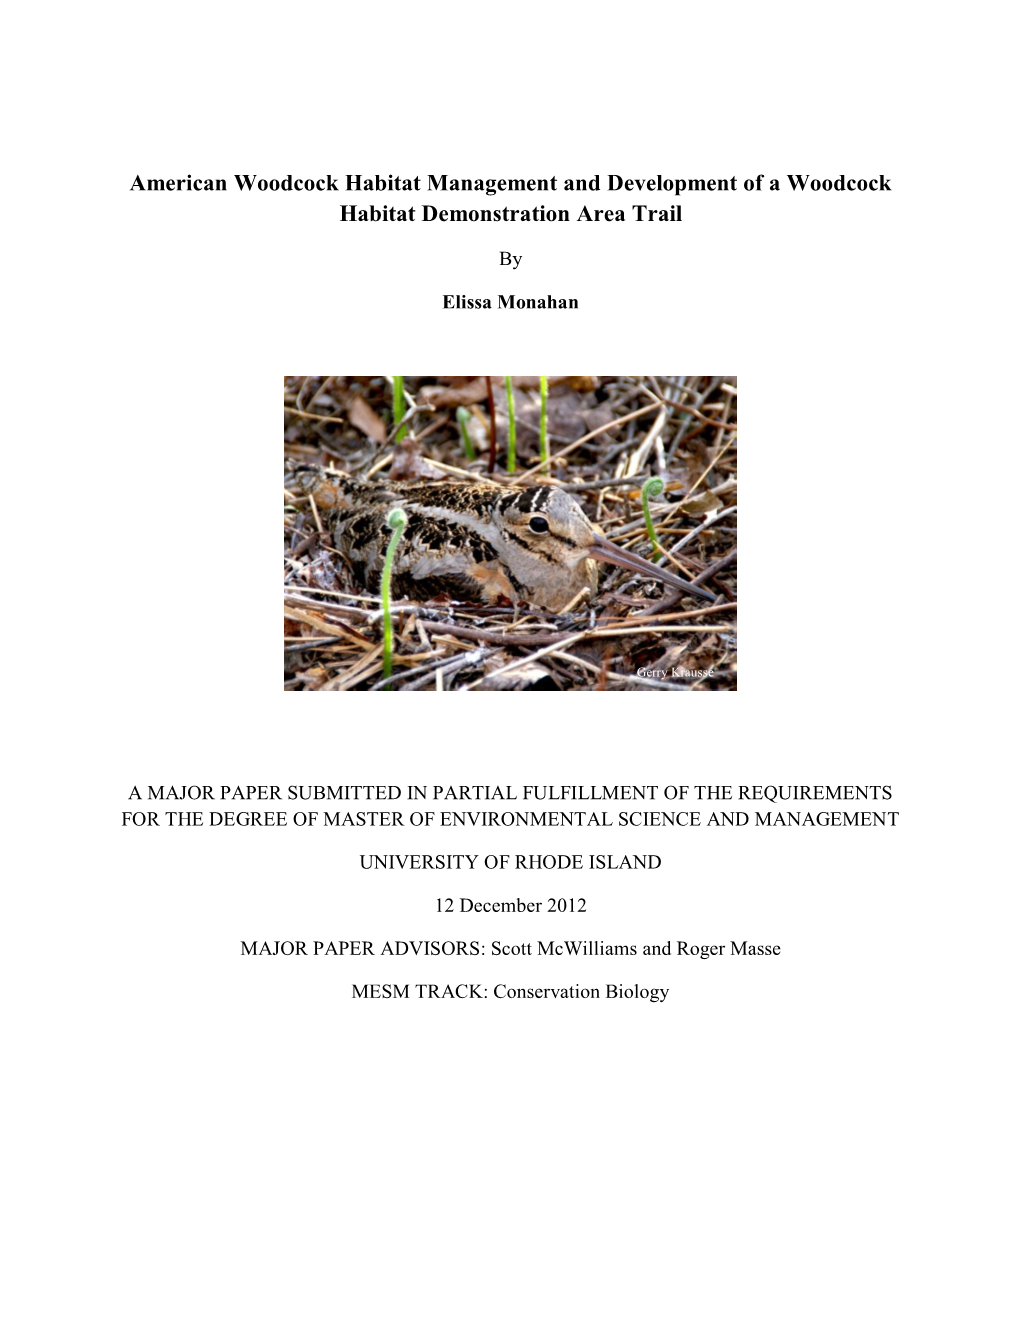 American Woodcock Habitat Management and Development of a Woodcock Habitat Demonstration Area Trail